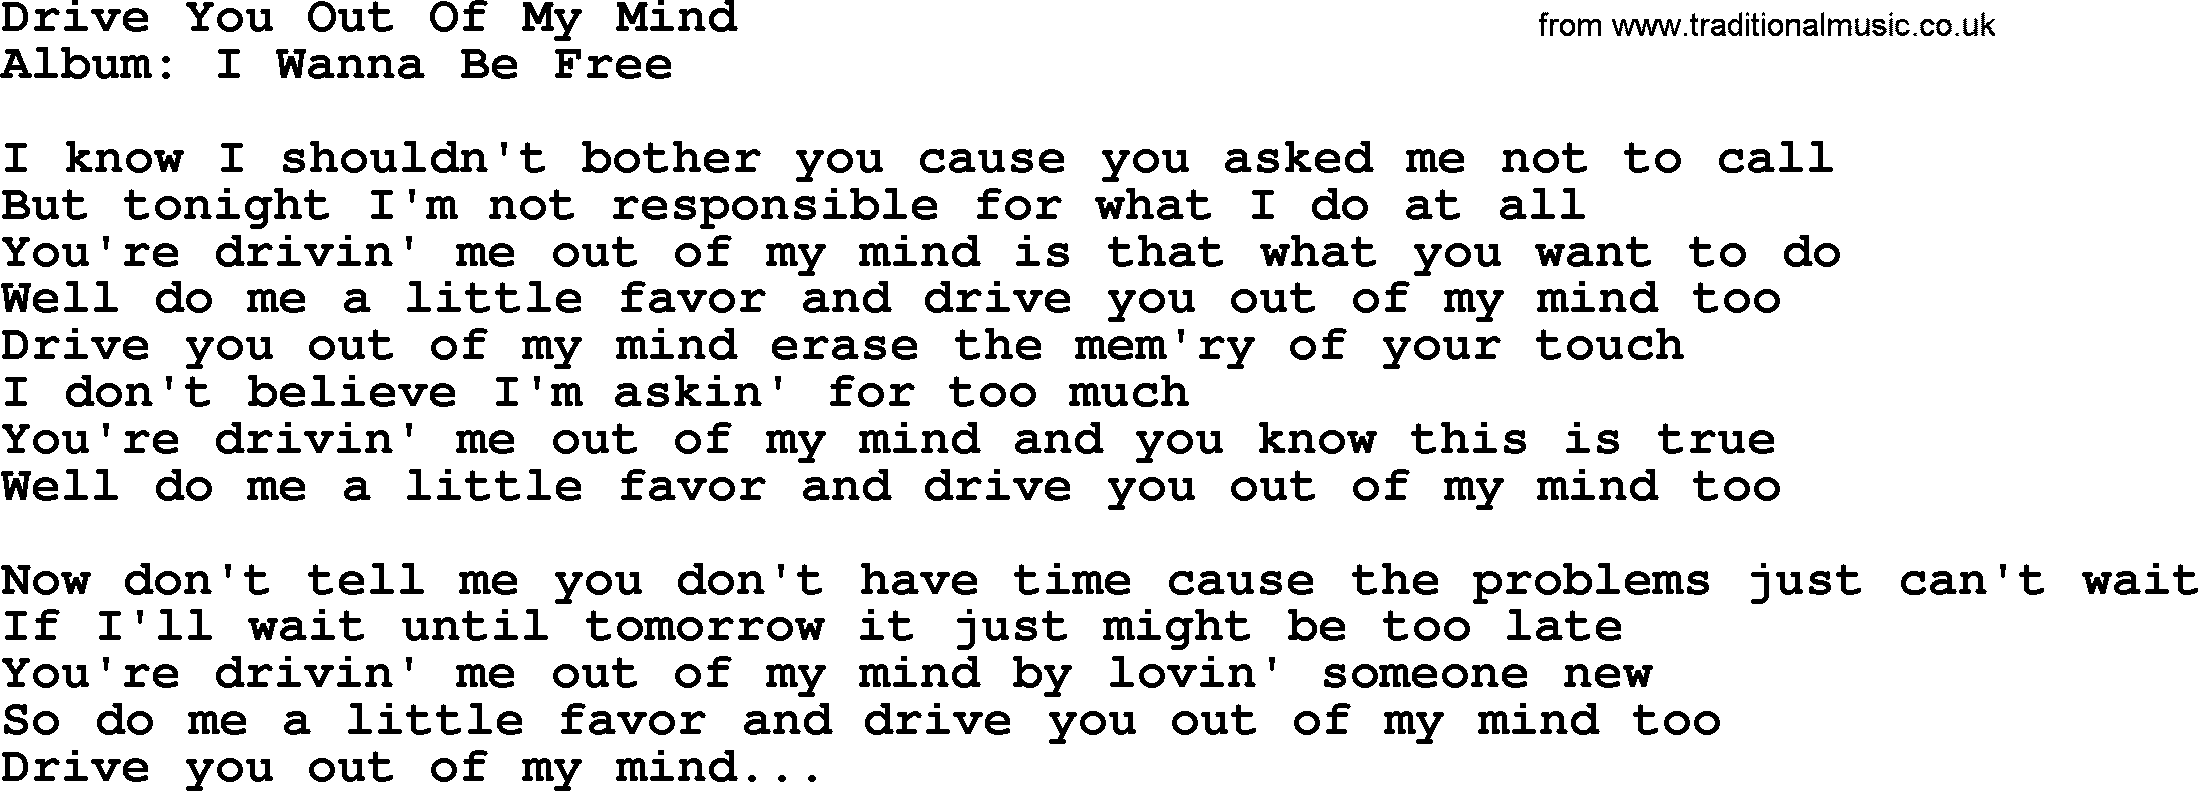 Loretta Lynn song: Drive You Out Of My Mind lyrics